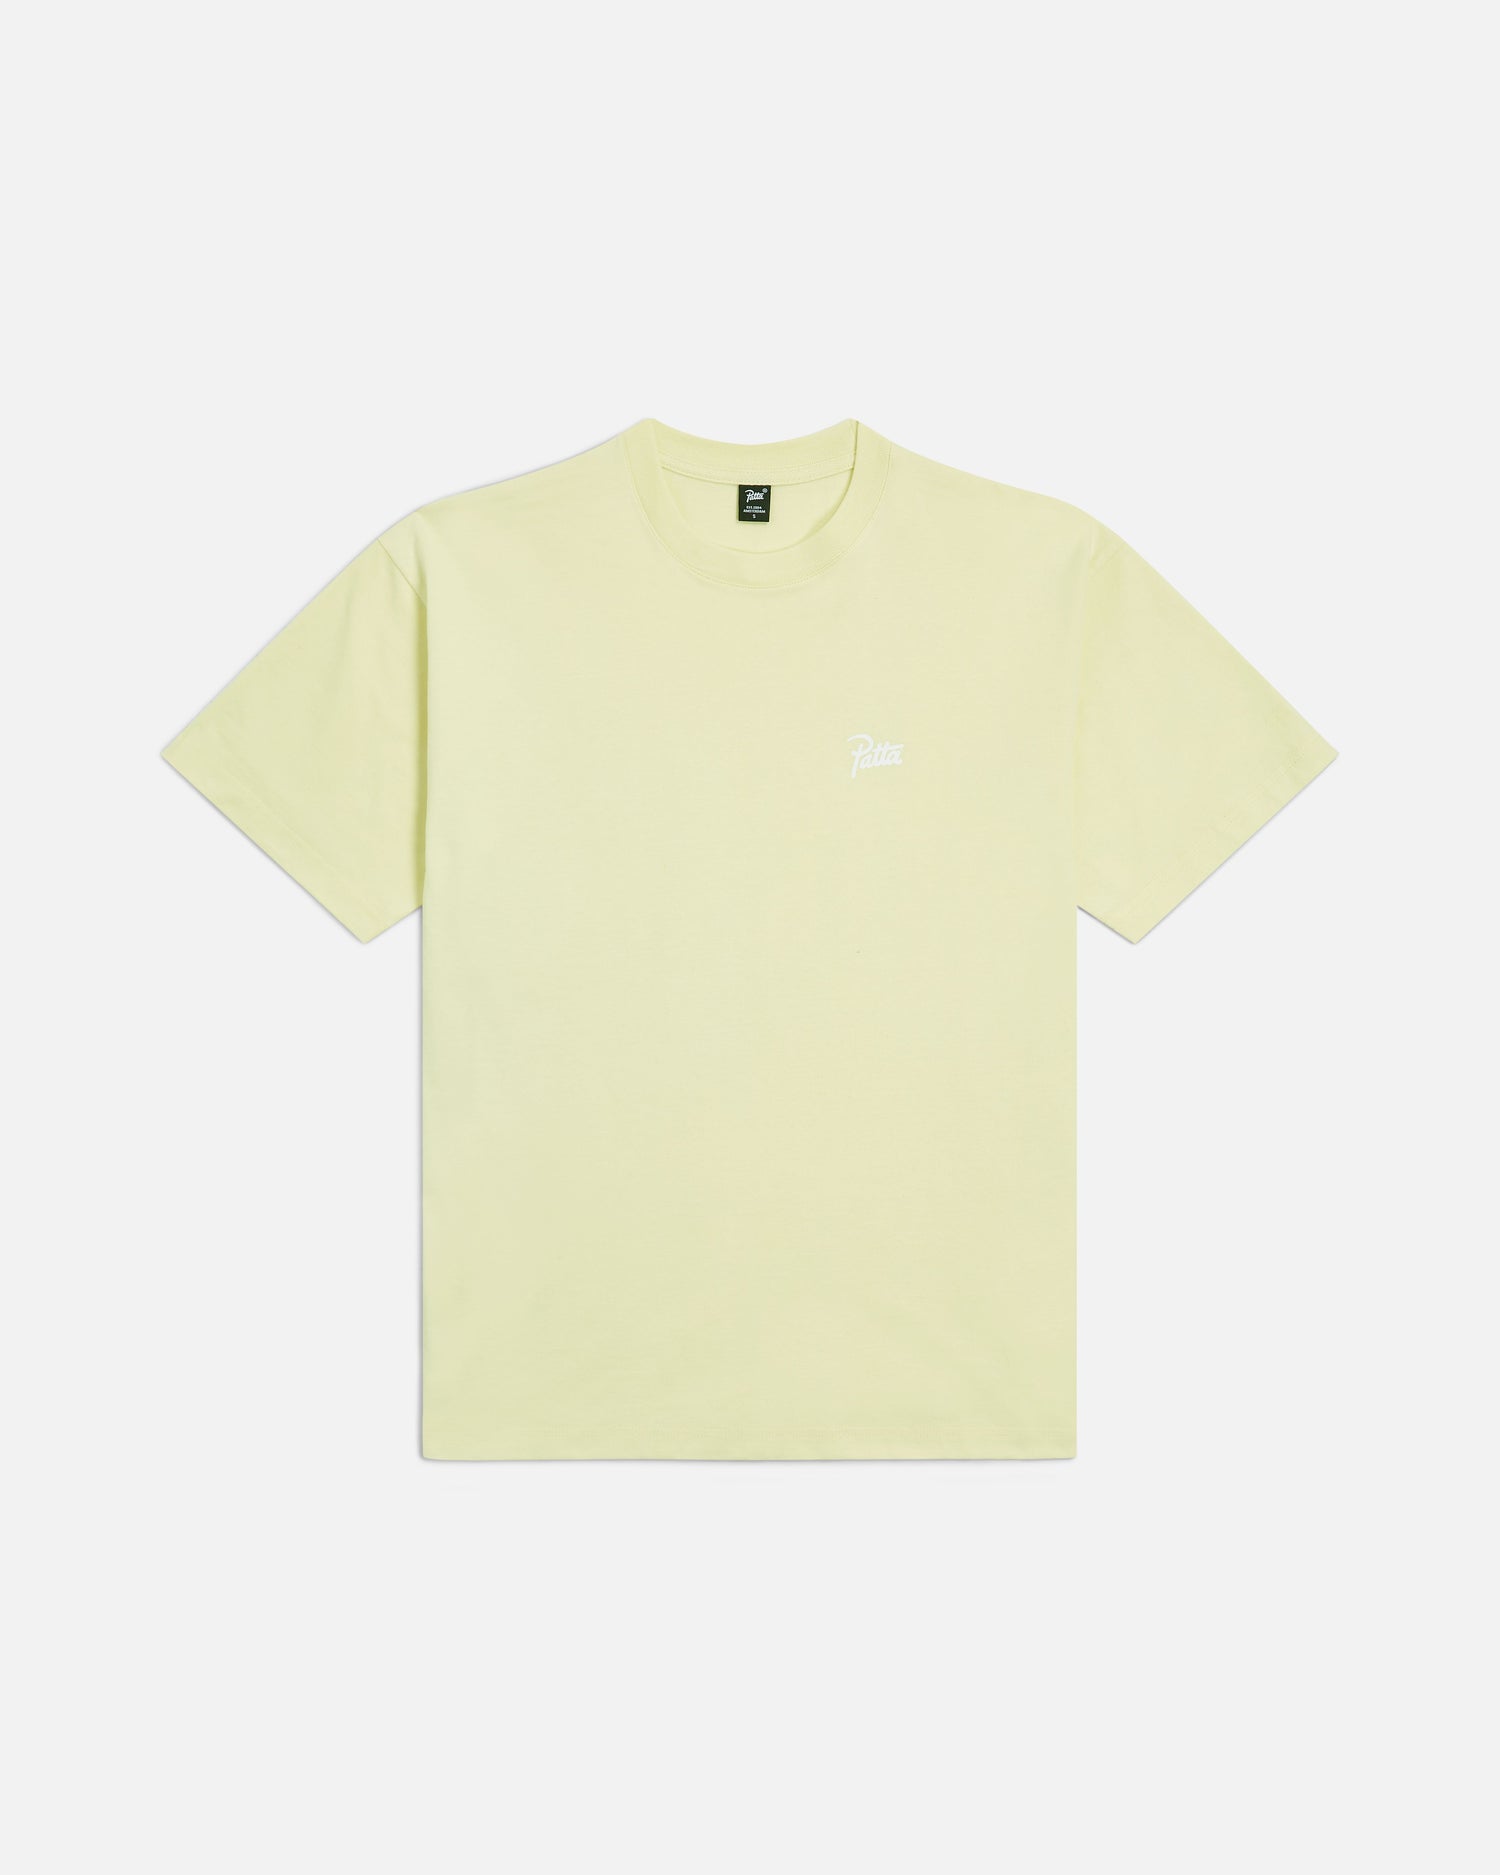 Patta Some Like It Hot T-Shirt (Wax Yellow)